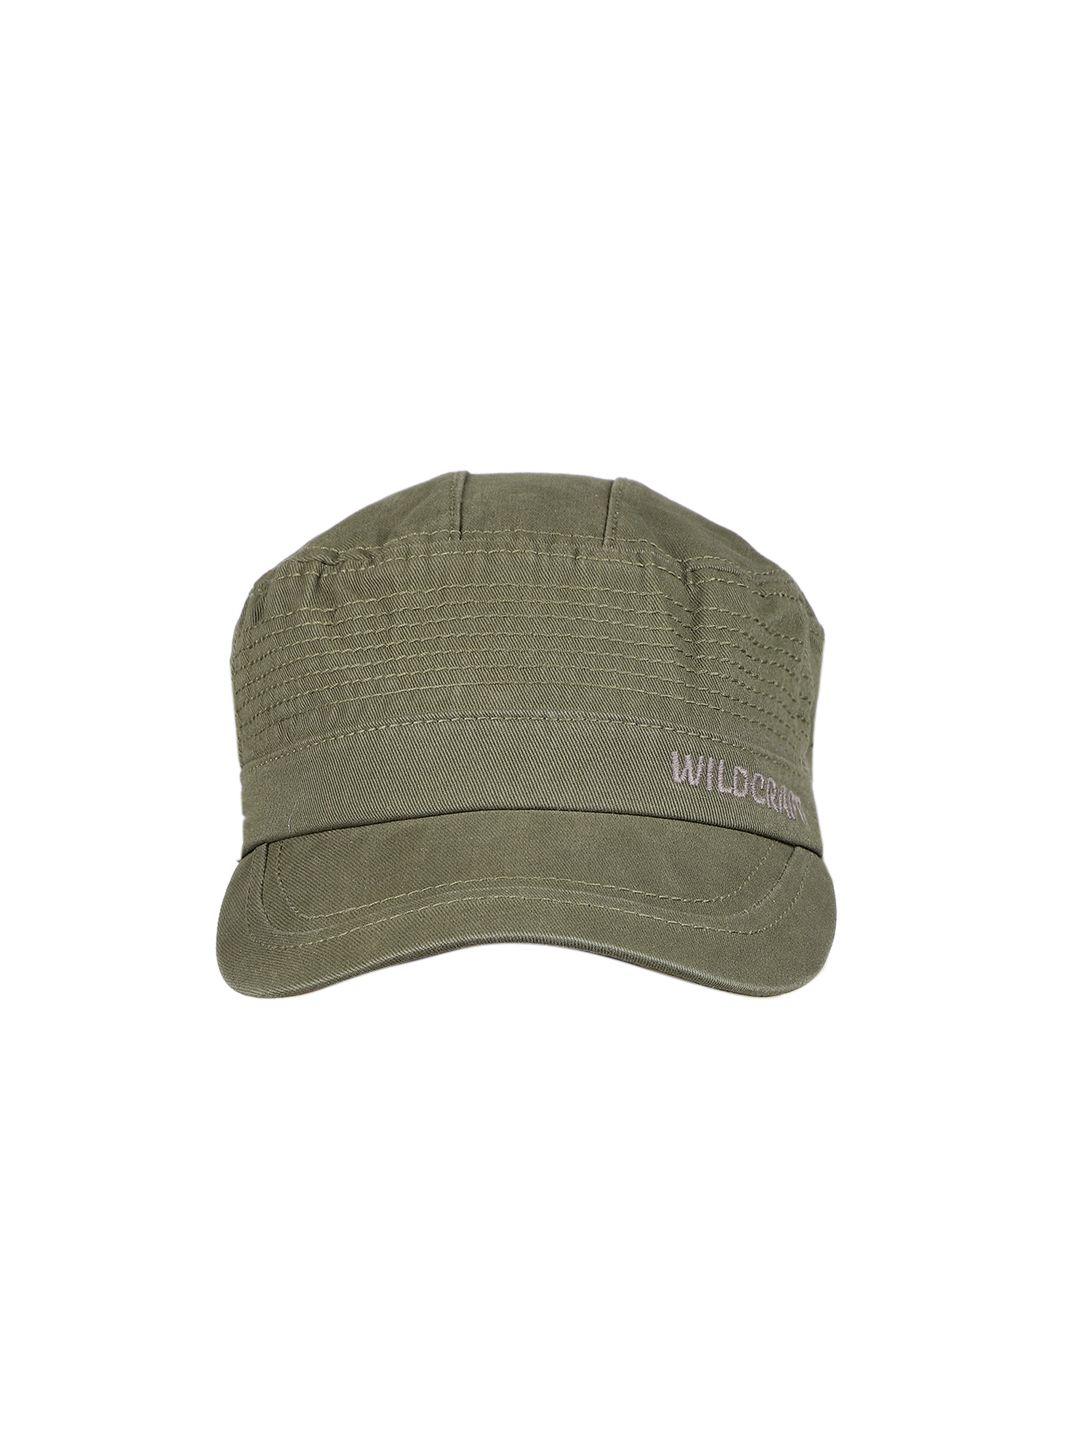 wildcraft unisex olive green baseball cap